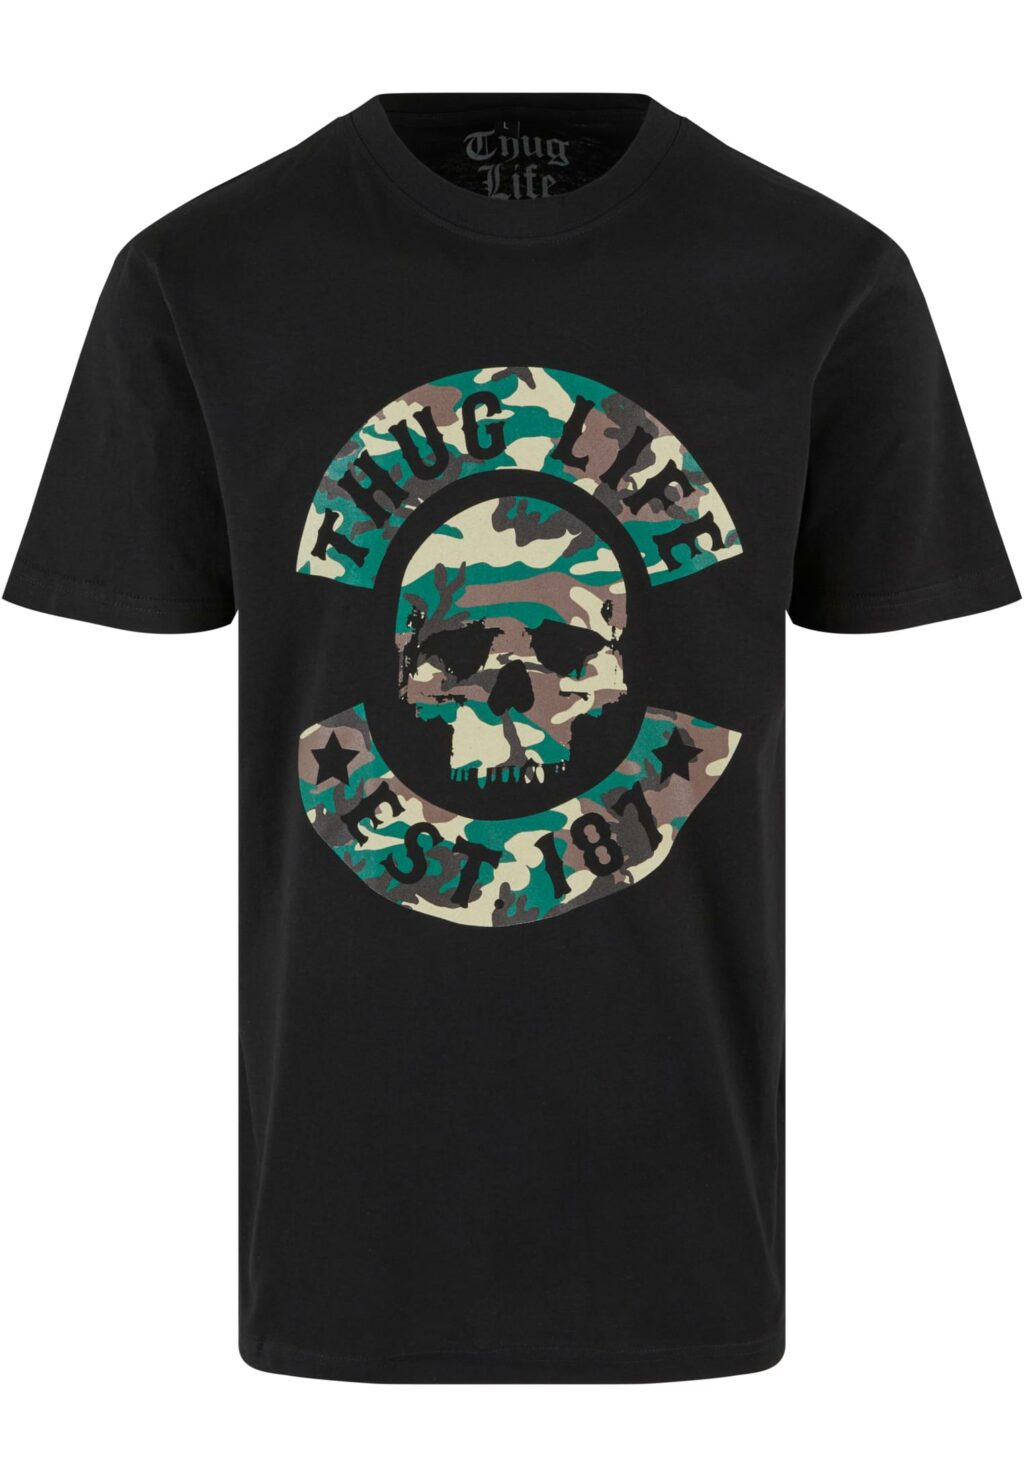 Thug Life B.Skull Camo T-Shirt black TLTS162